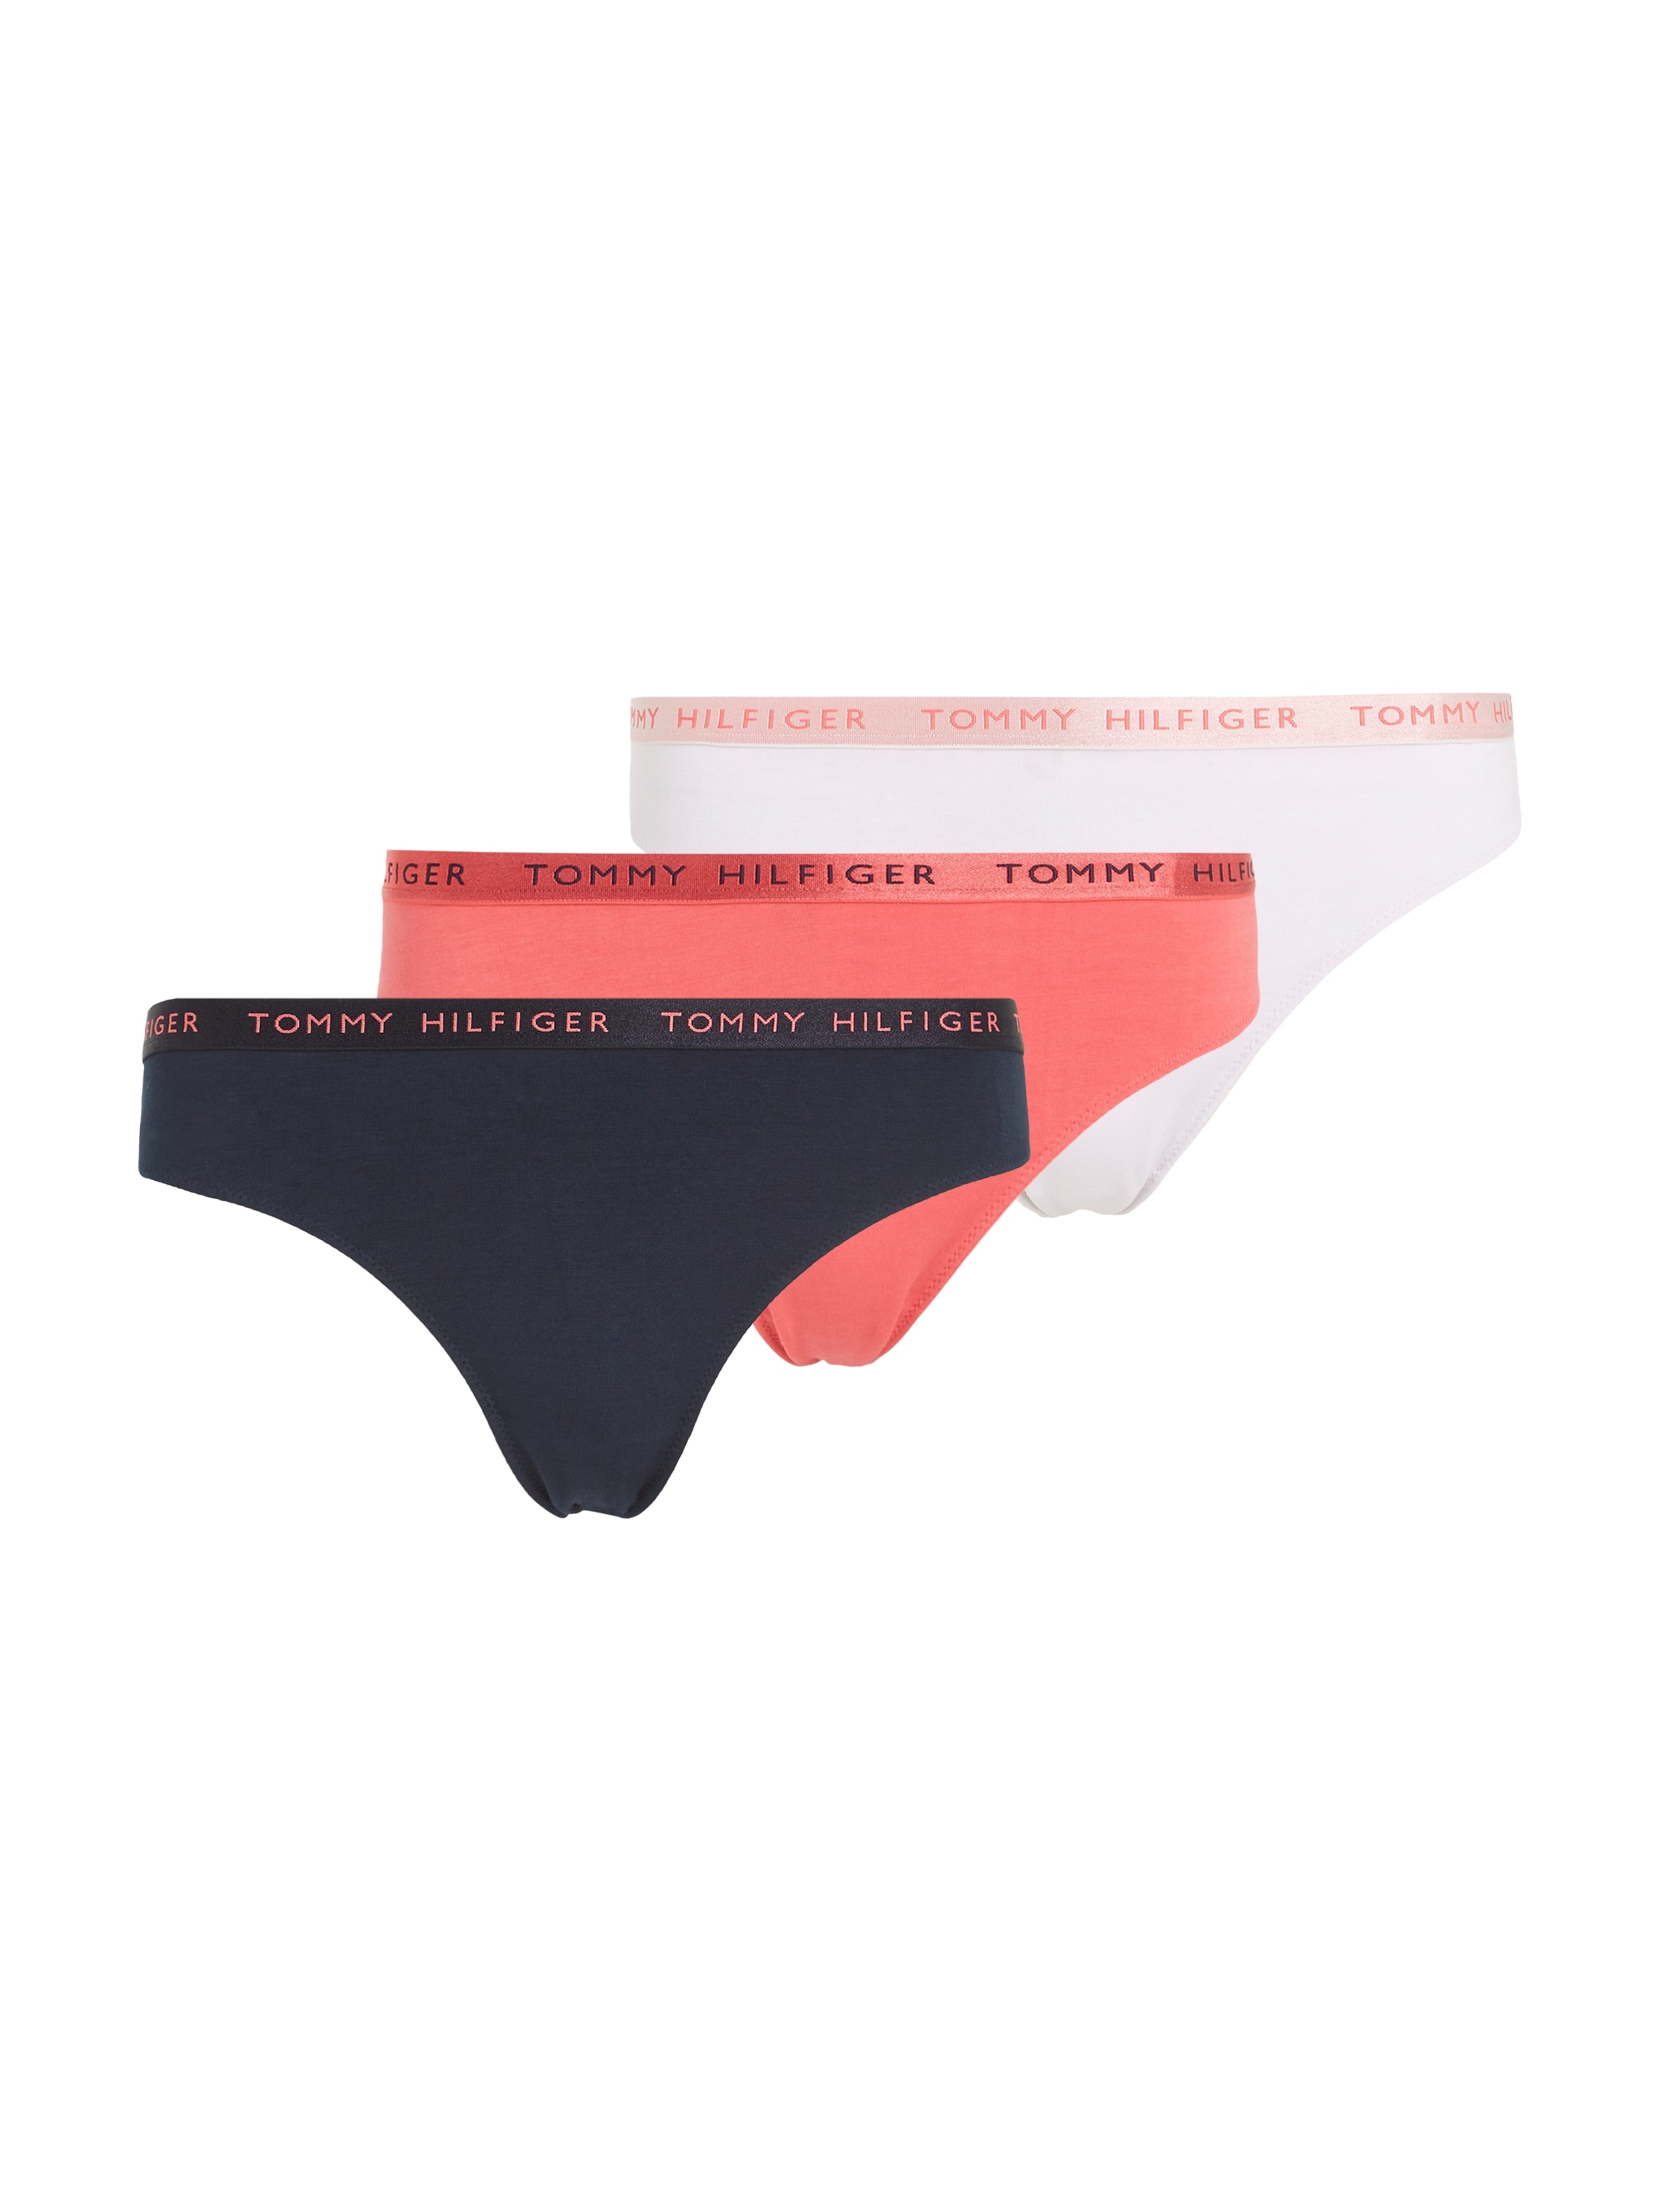 GIFTING«, Hilfiger 3er-Pack), Underwear Tommy Hilfiger Tommy OTTO Logobund 3 (Packung, Online T-String Shop PACK im mit THONG »SHINE